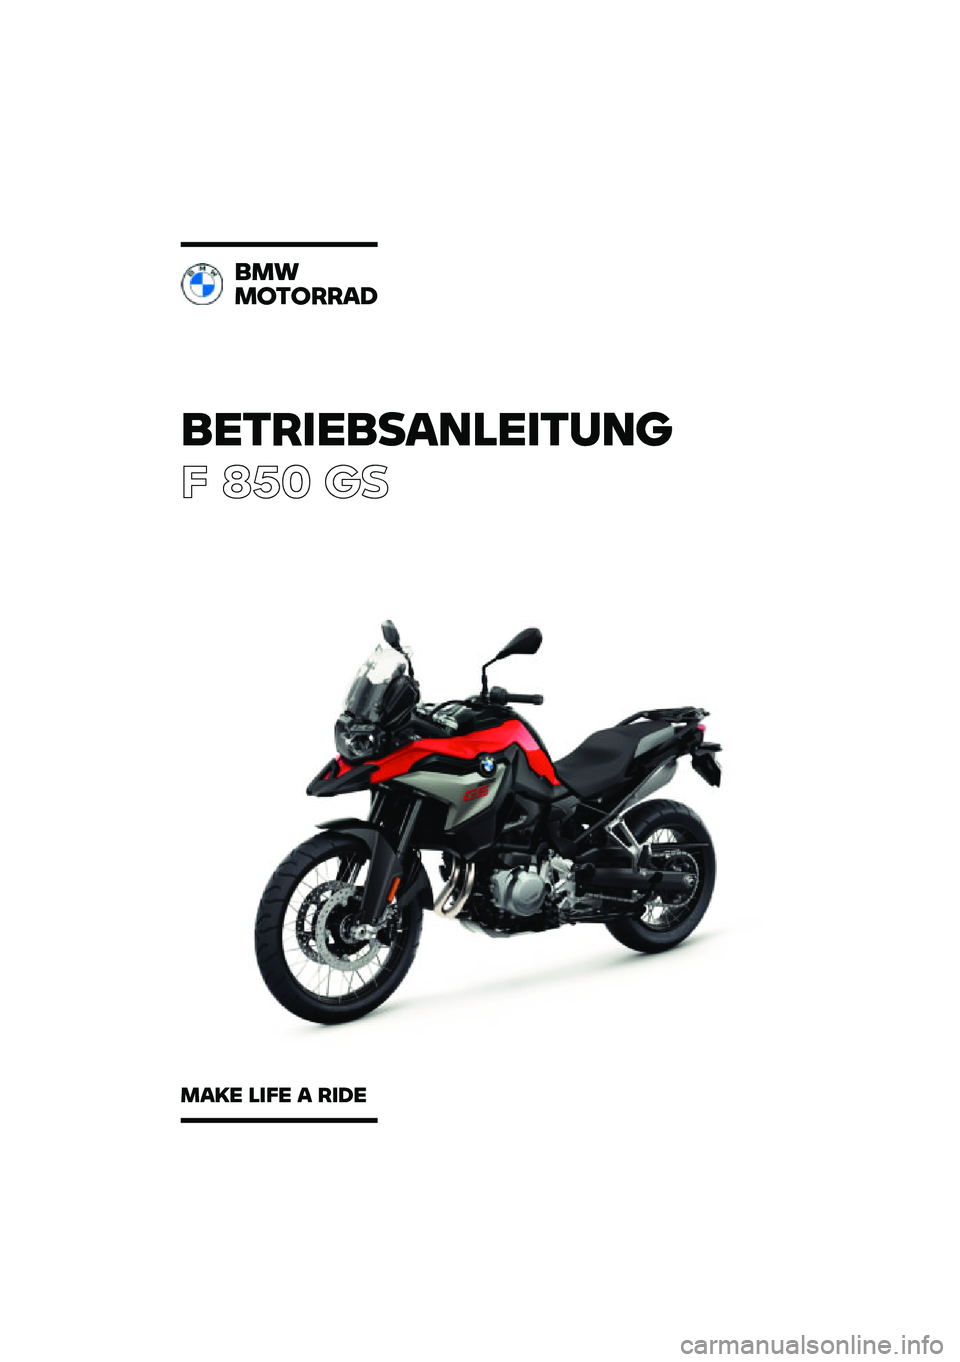 BMW MOTORRAD F 850 GS 2021  Betriebsanleitung (in German) ���������\b�	�
�����	�\f
� ��� �	�

��
�
�
������\b�
�
�\b�� �
��� �\b ���� 